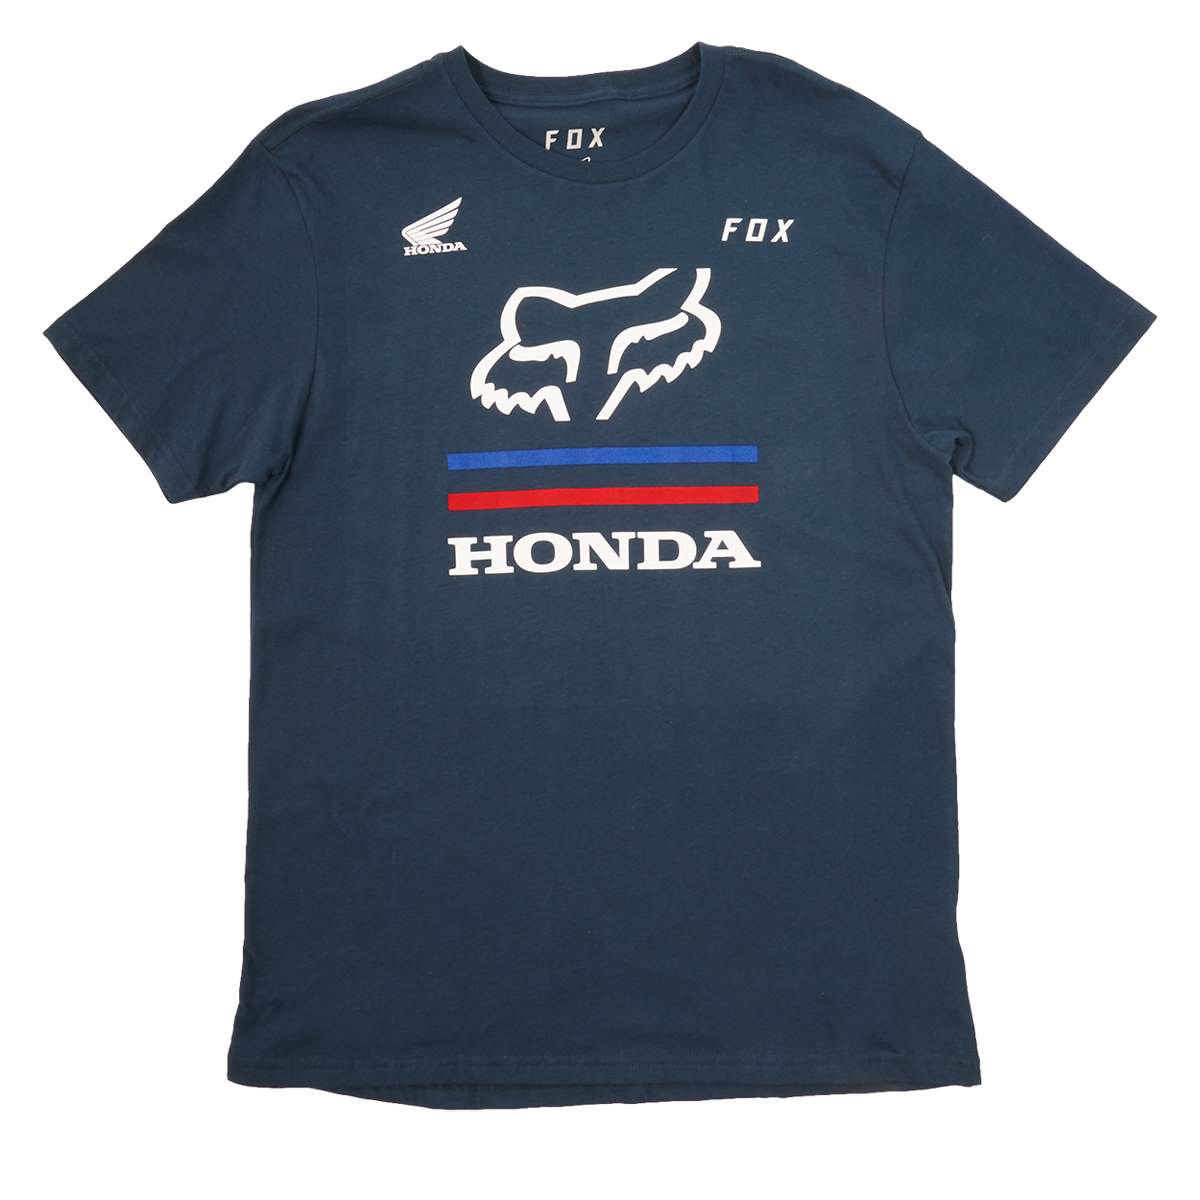 Fox Honda Short Sleeve Premium Tee